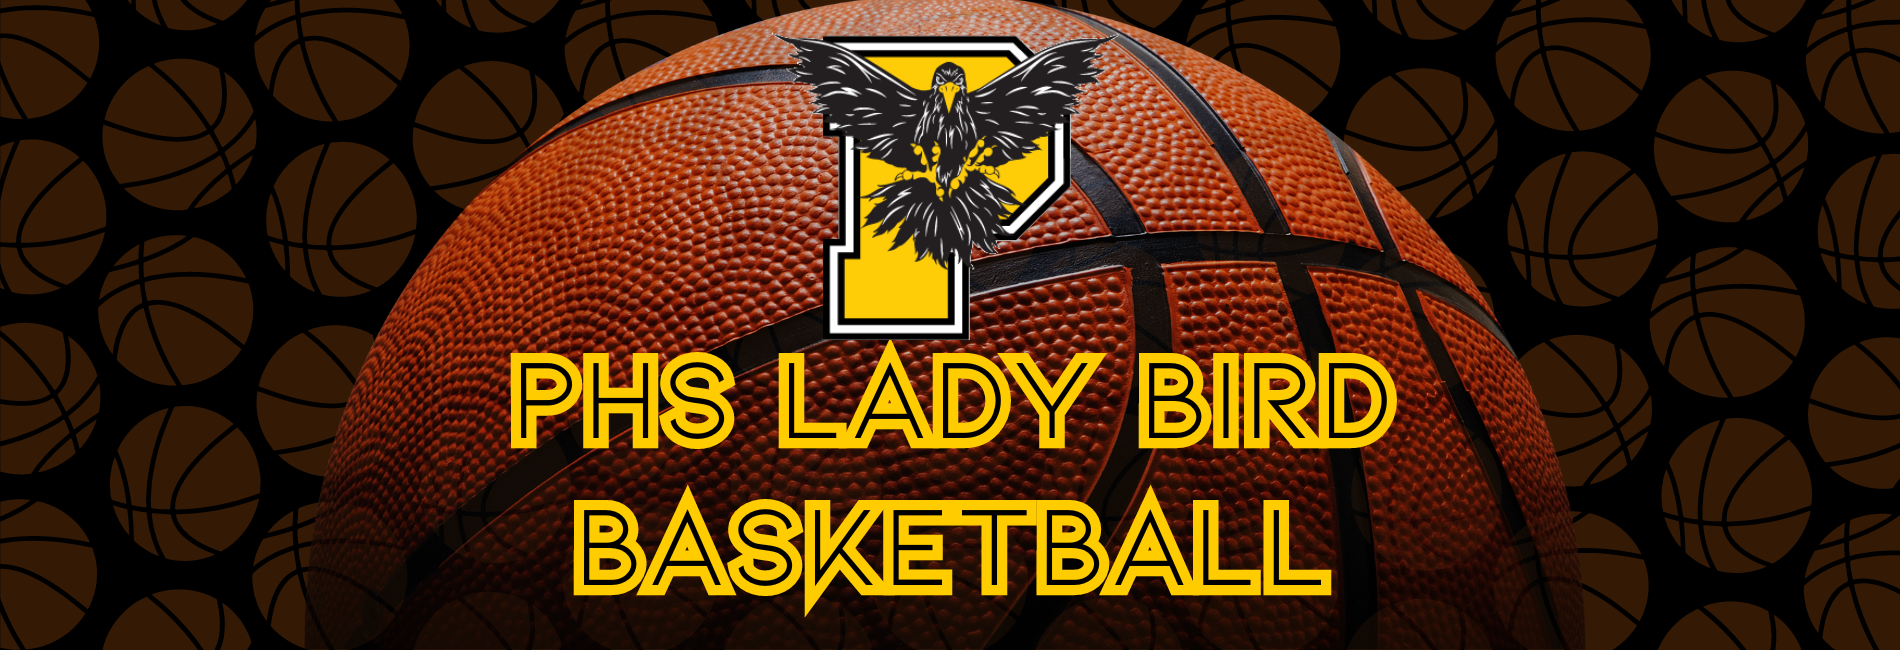 PHS Lady Bird Basketball